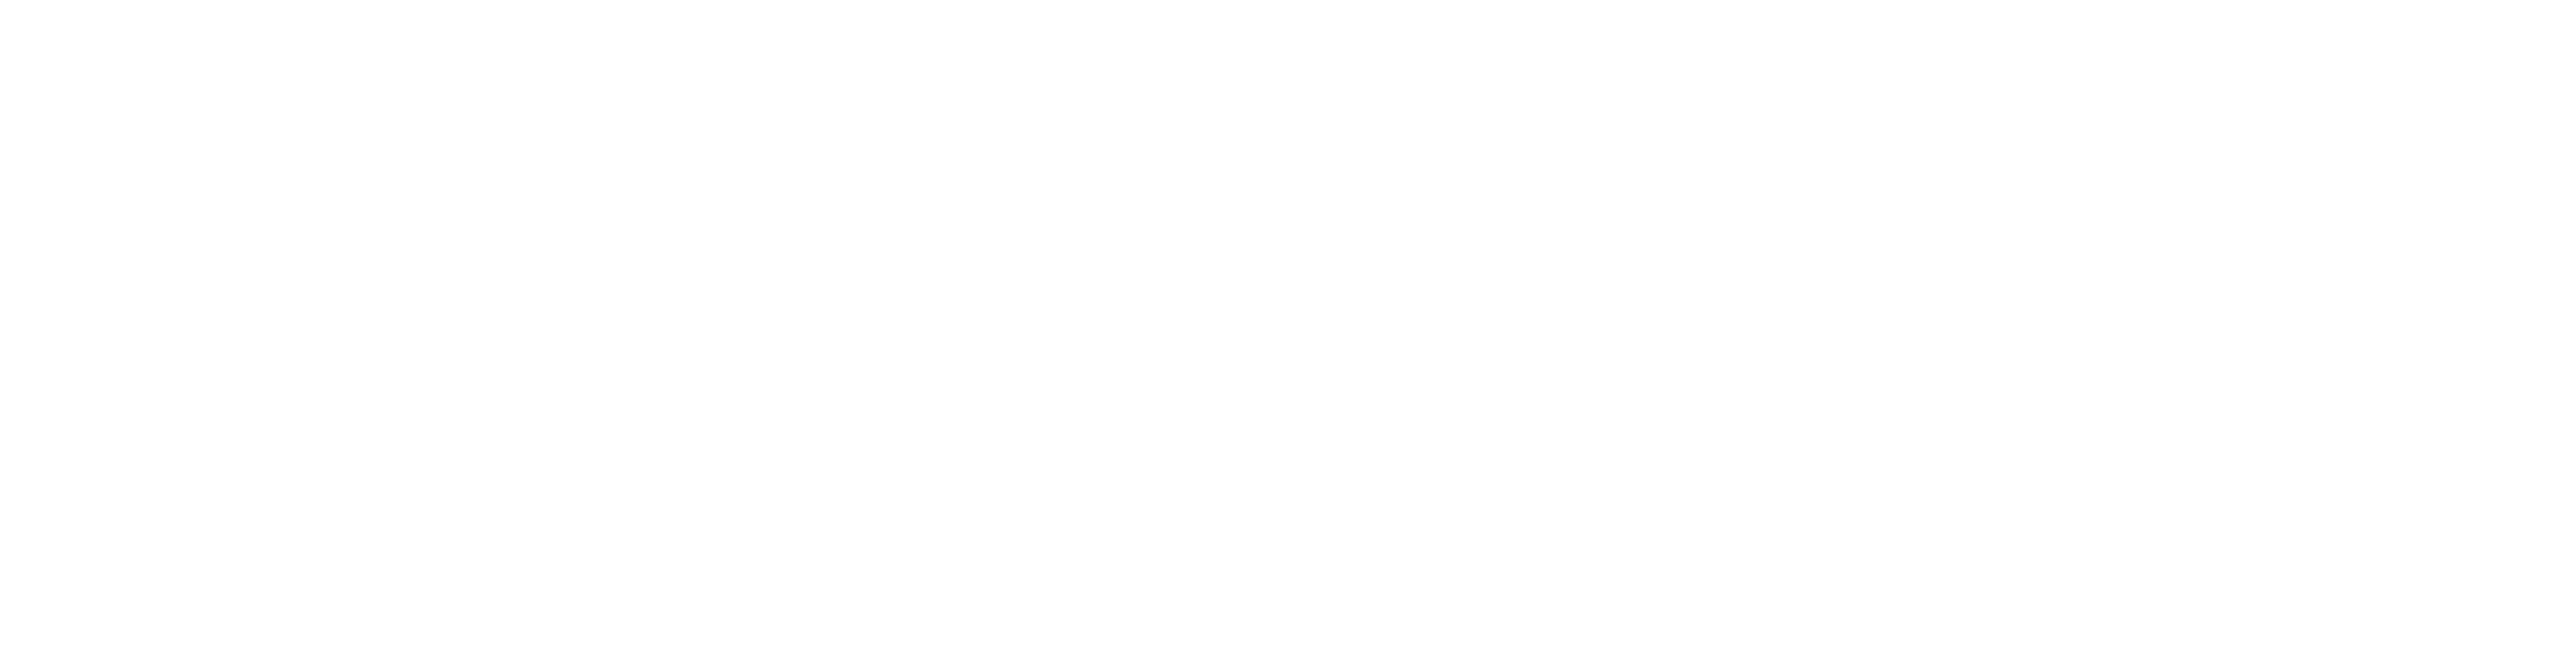 Transcend Awards - Ofqual Regulated Awarding Organisation